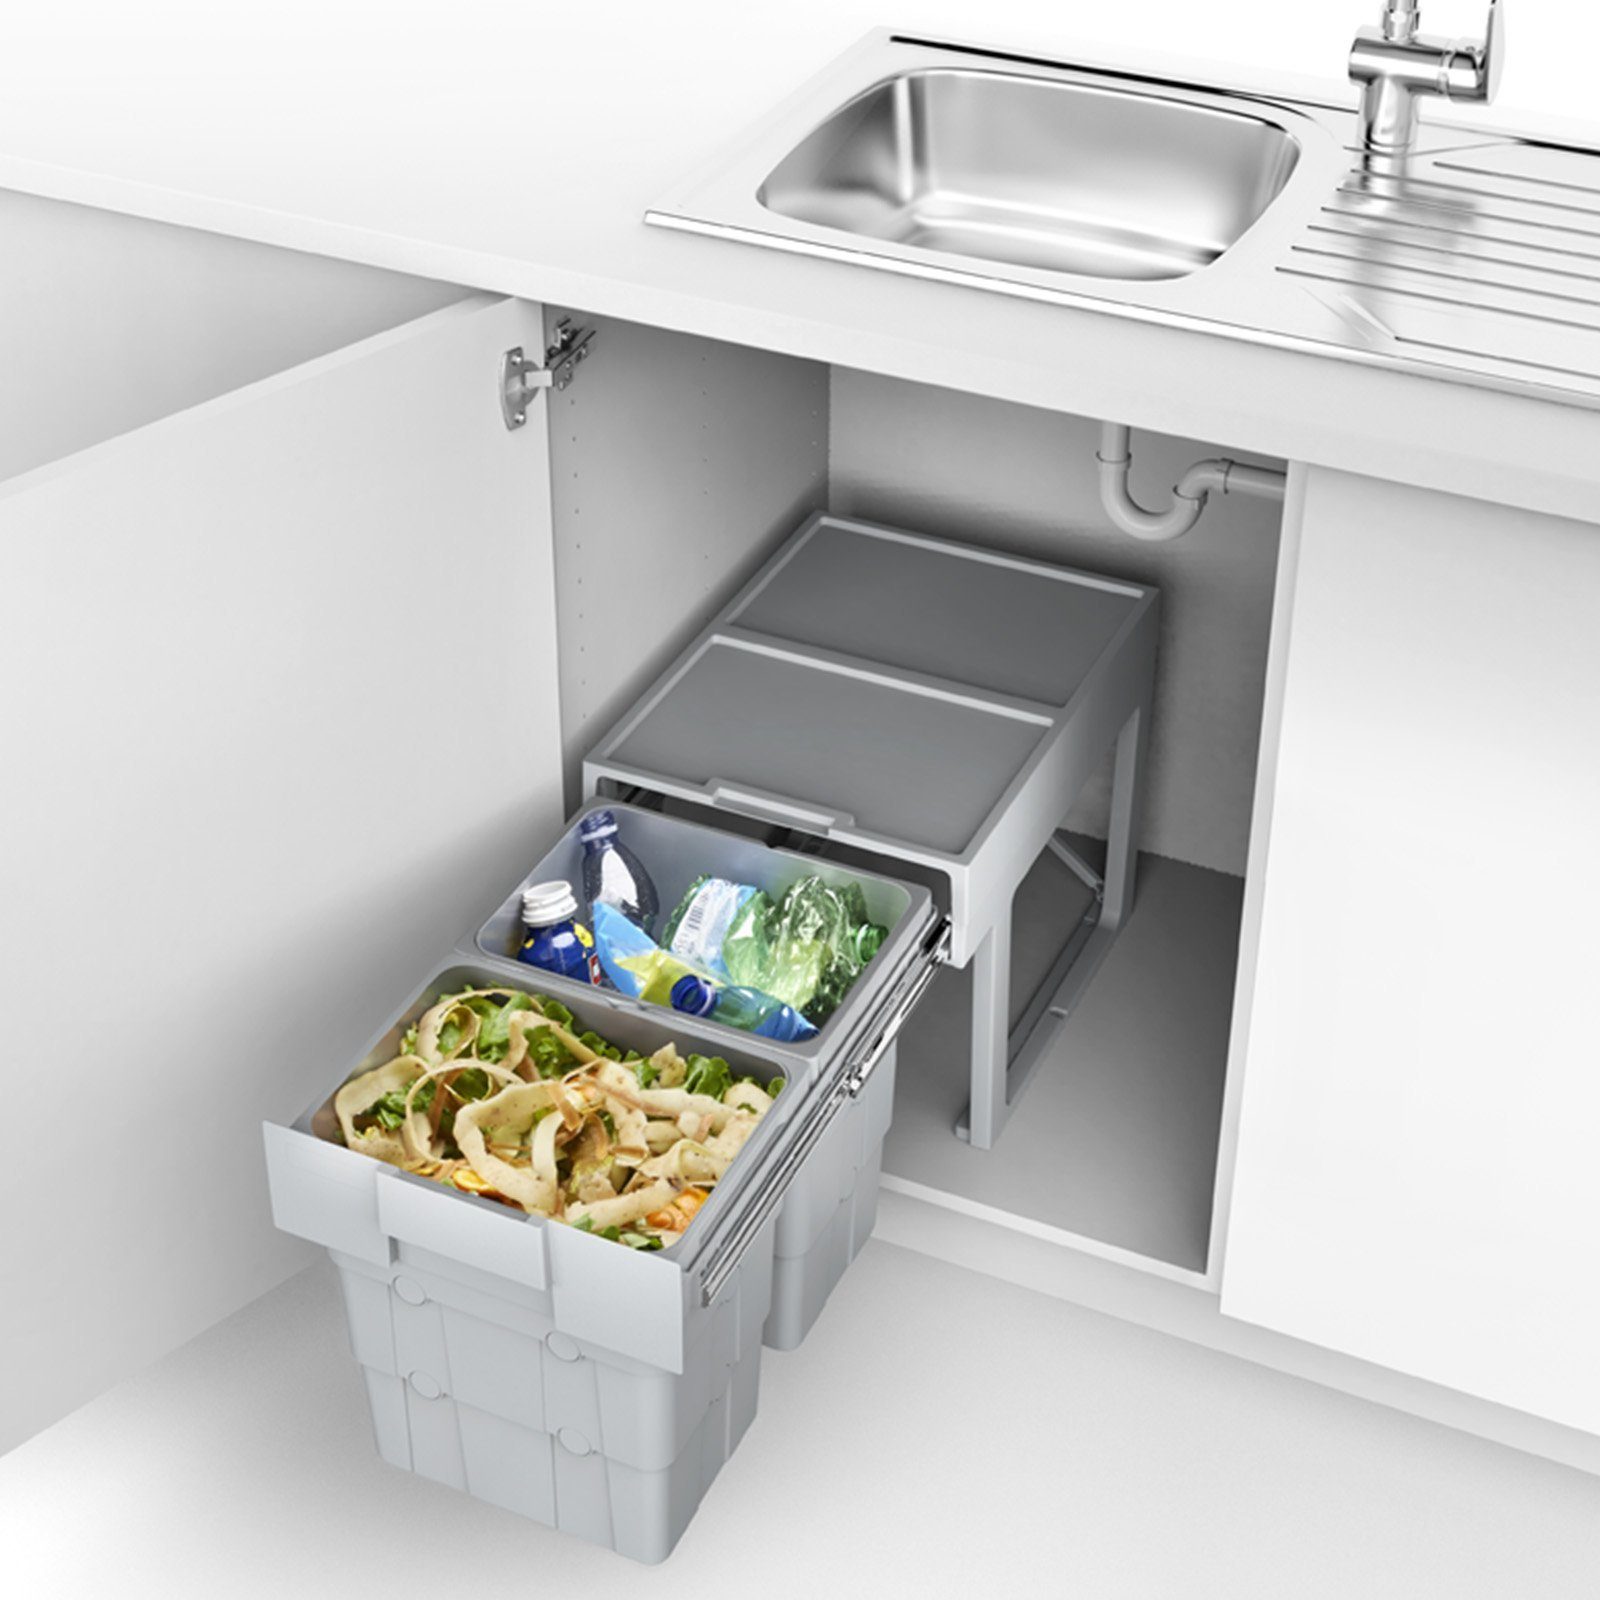 SO-TECH® Mülltrennsystem Abfalltrennsystem essensa easywaste mit 2 oder 3- fach Trennung